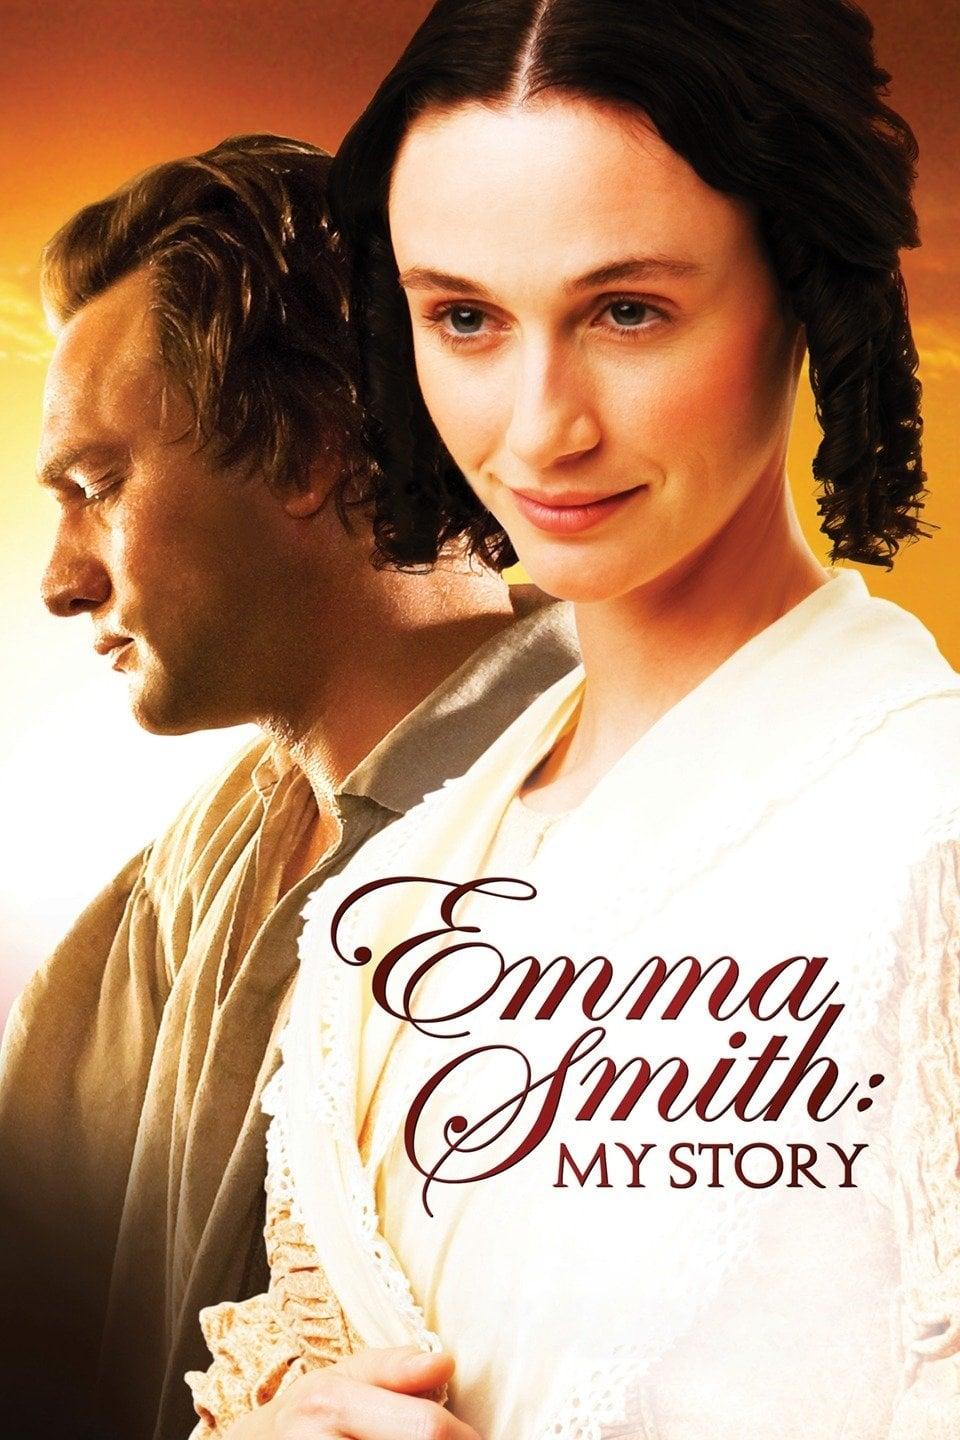 Emma Smith: My Story poster